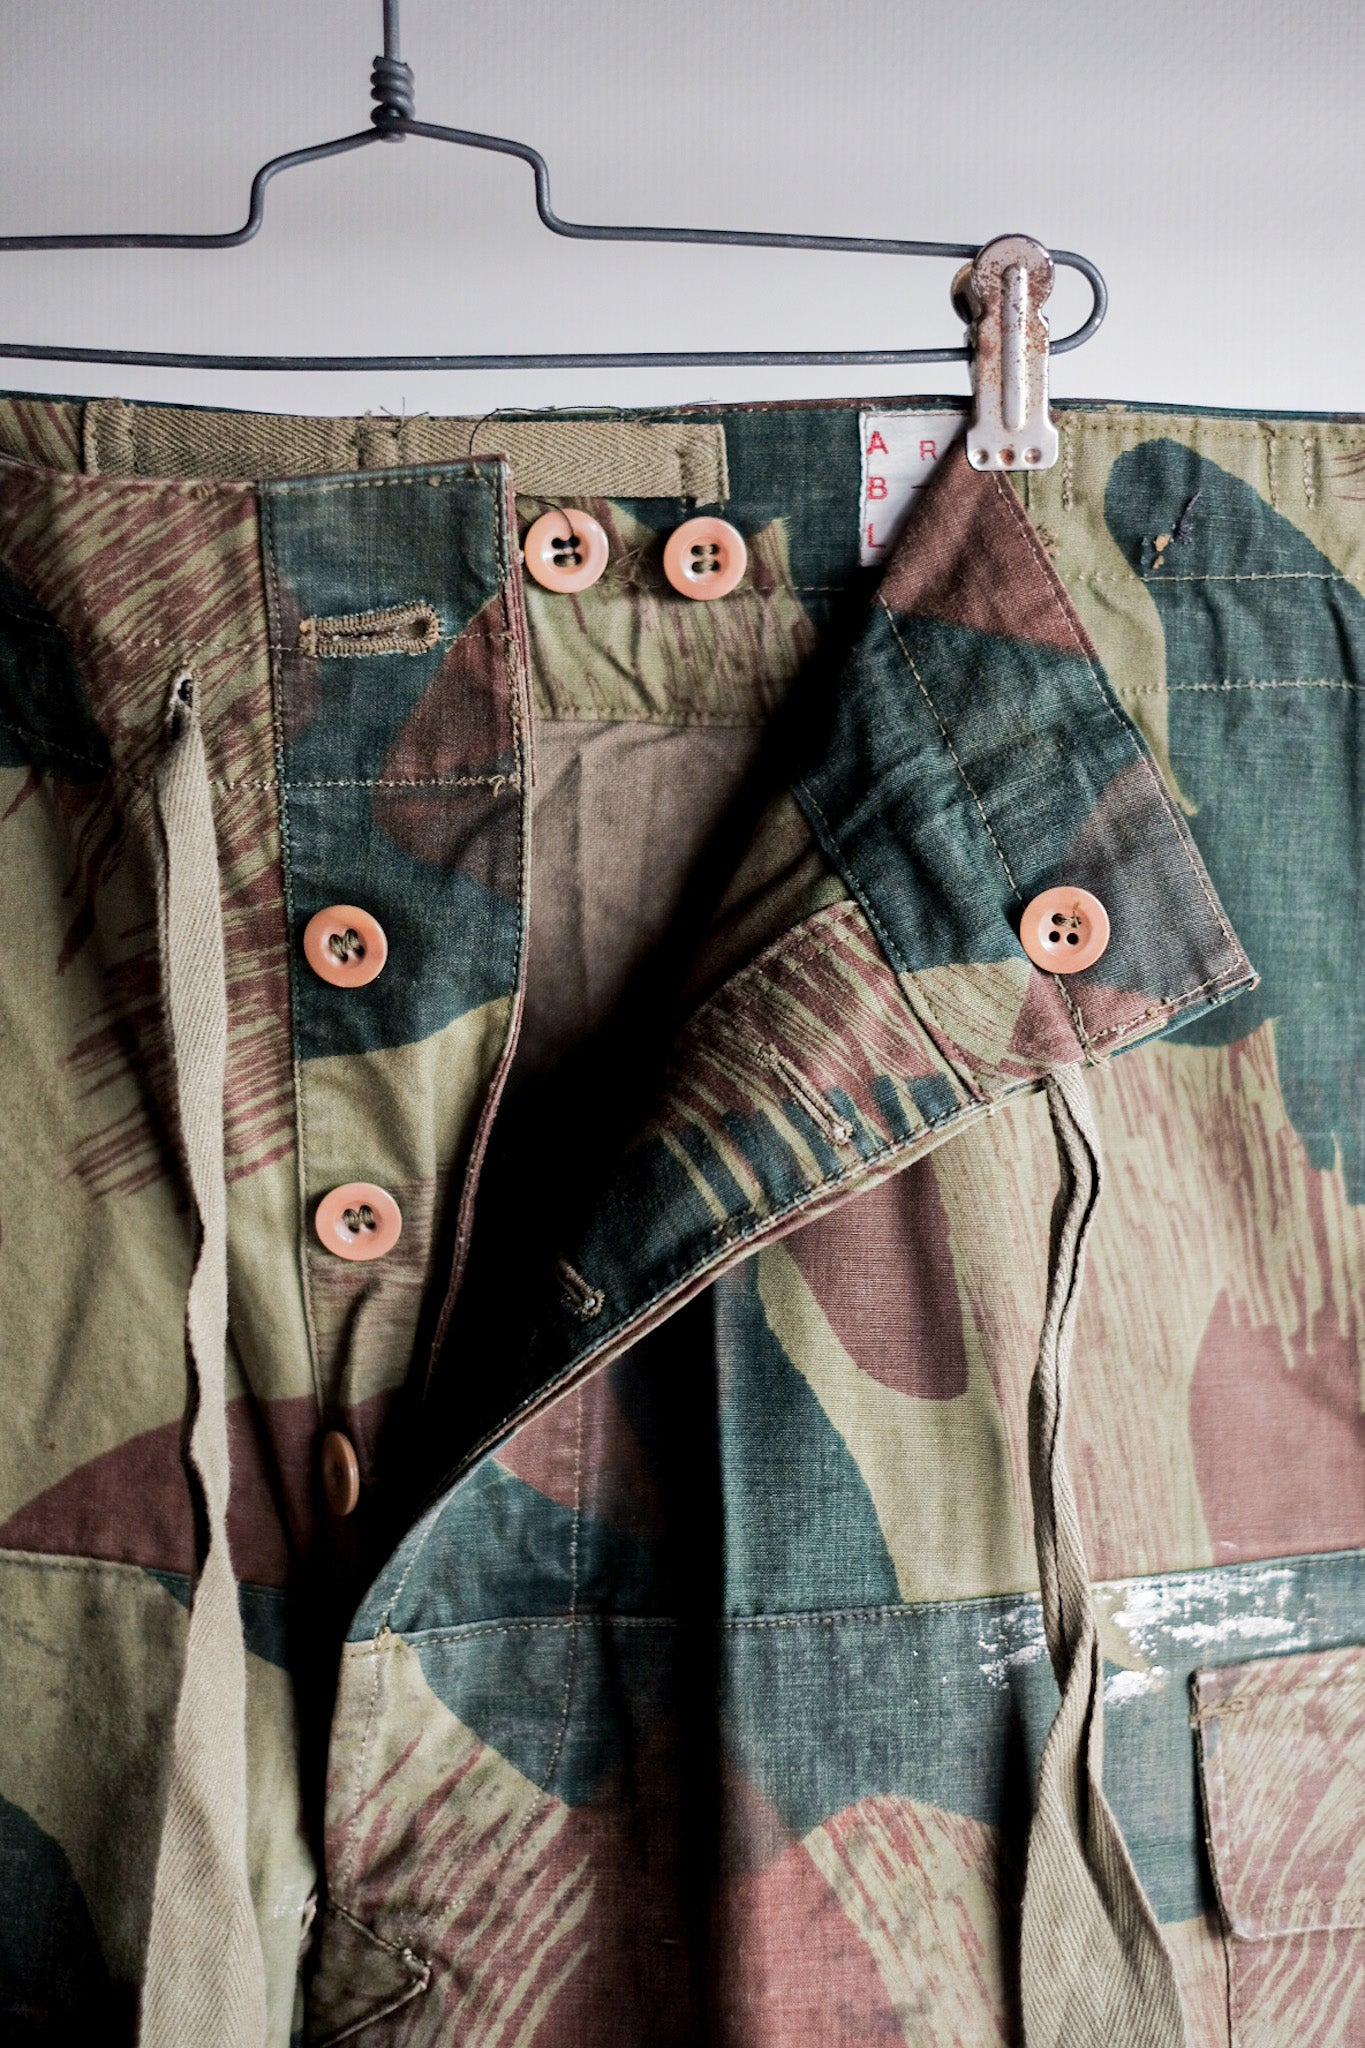 【~50's】Belgium Army Brushstroke Camo Airborne Pant Size.6